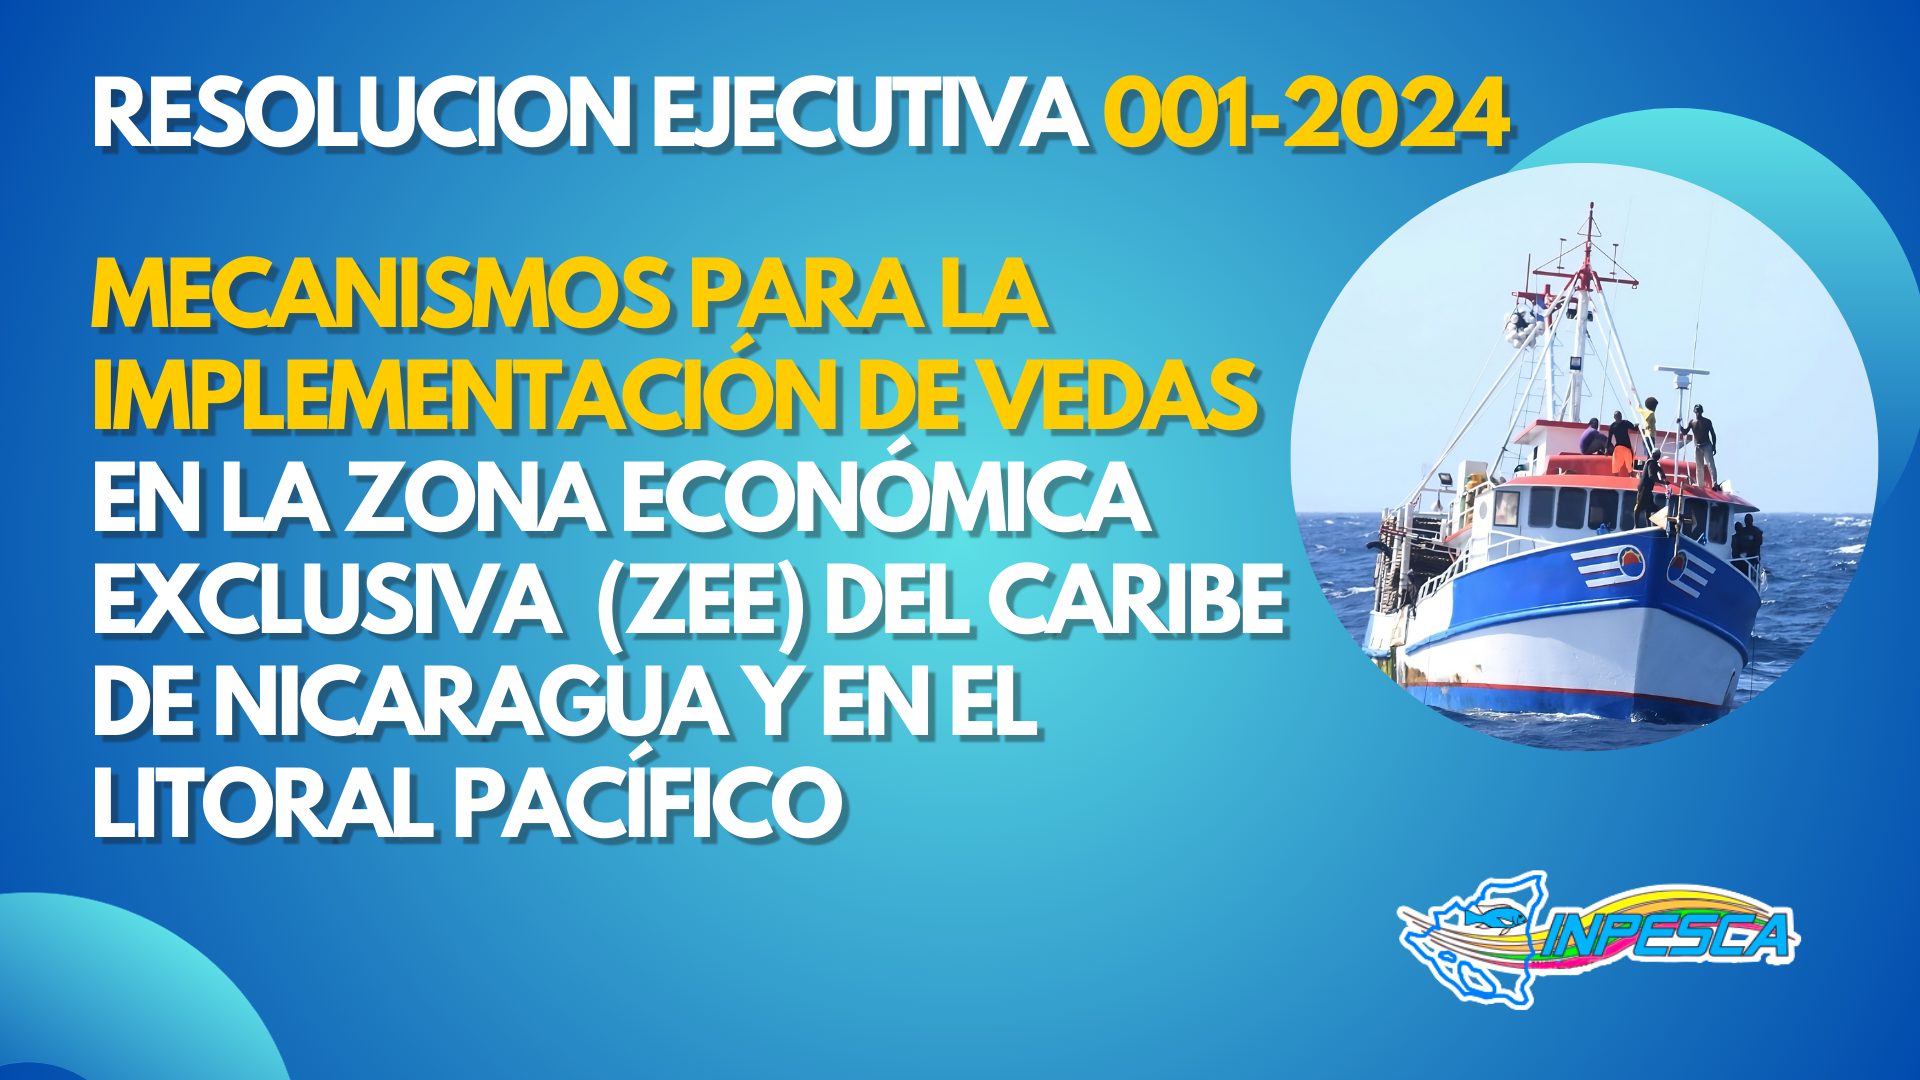 INPESCA - Instituto Nicaraguense De La Pesca Y Acuicultura